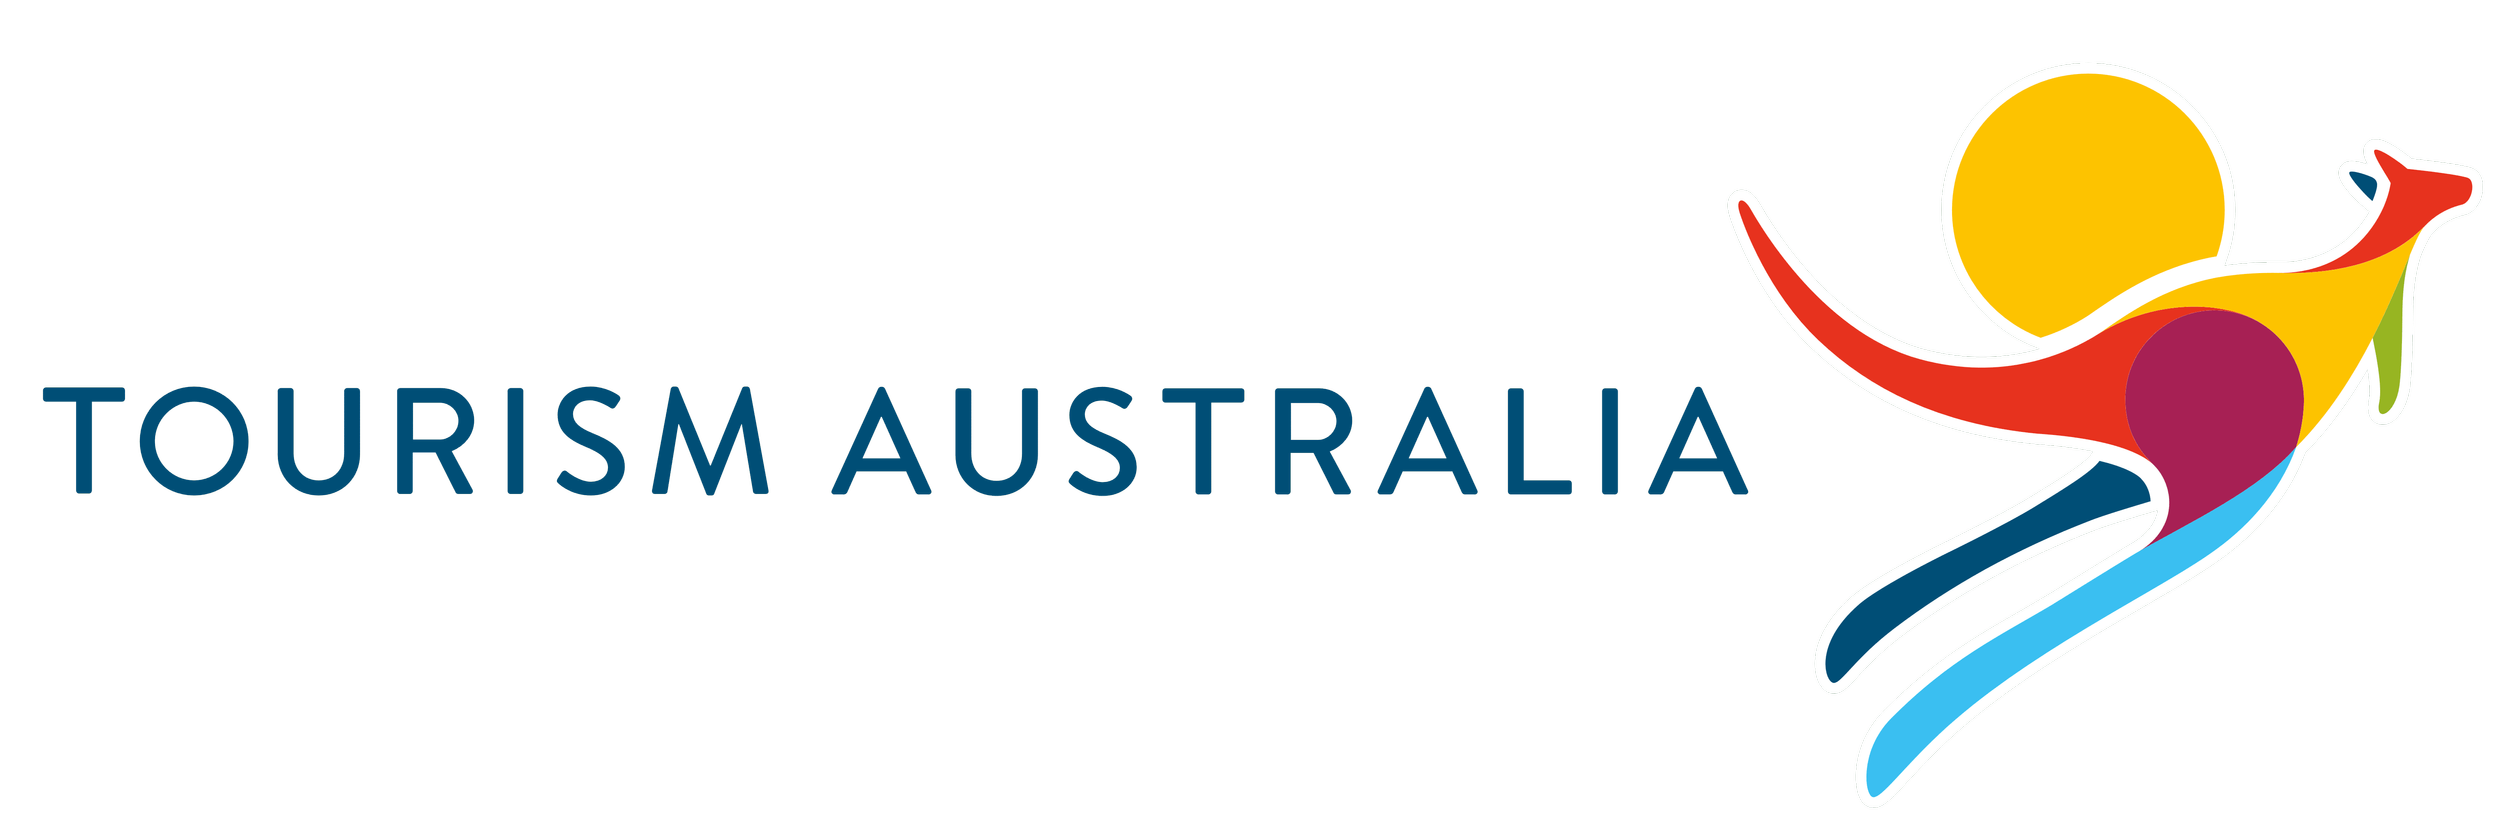 Tourism_Australia_logo_wordmark_horizontal.png